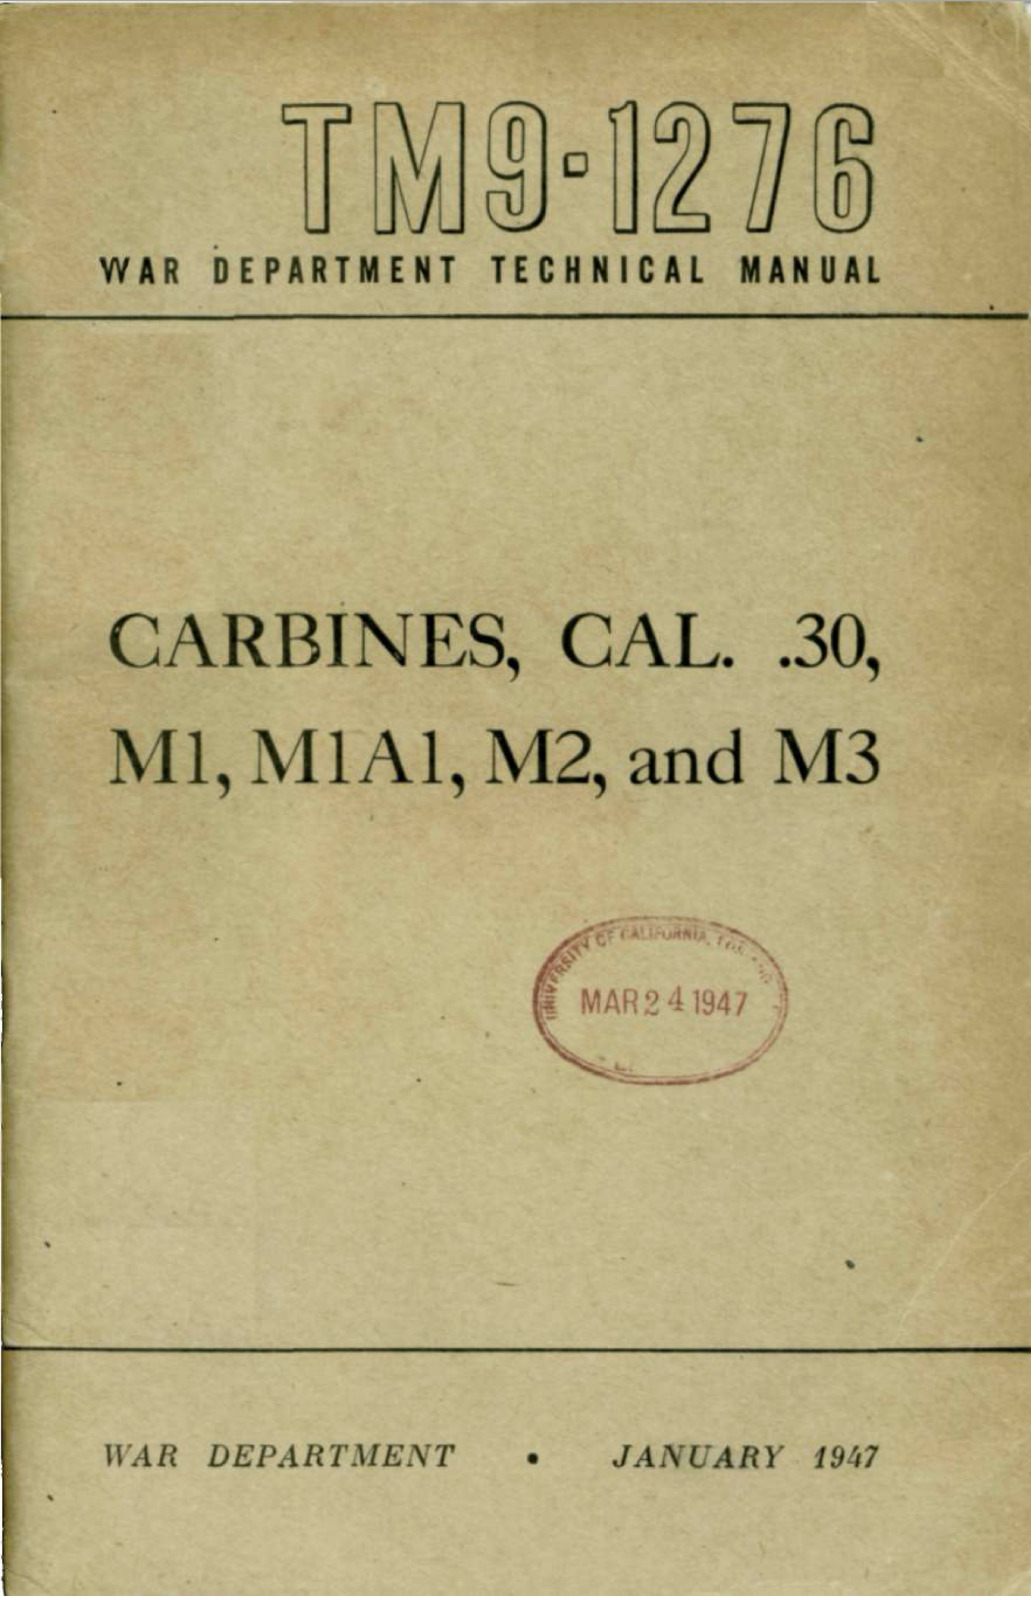 111 Page Jan 1947 CARBINE .30 CAL M1 M1A1 M2 M3 TM 9-1276 Technical Manual on CD